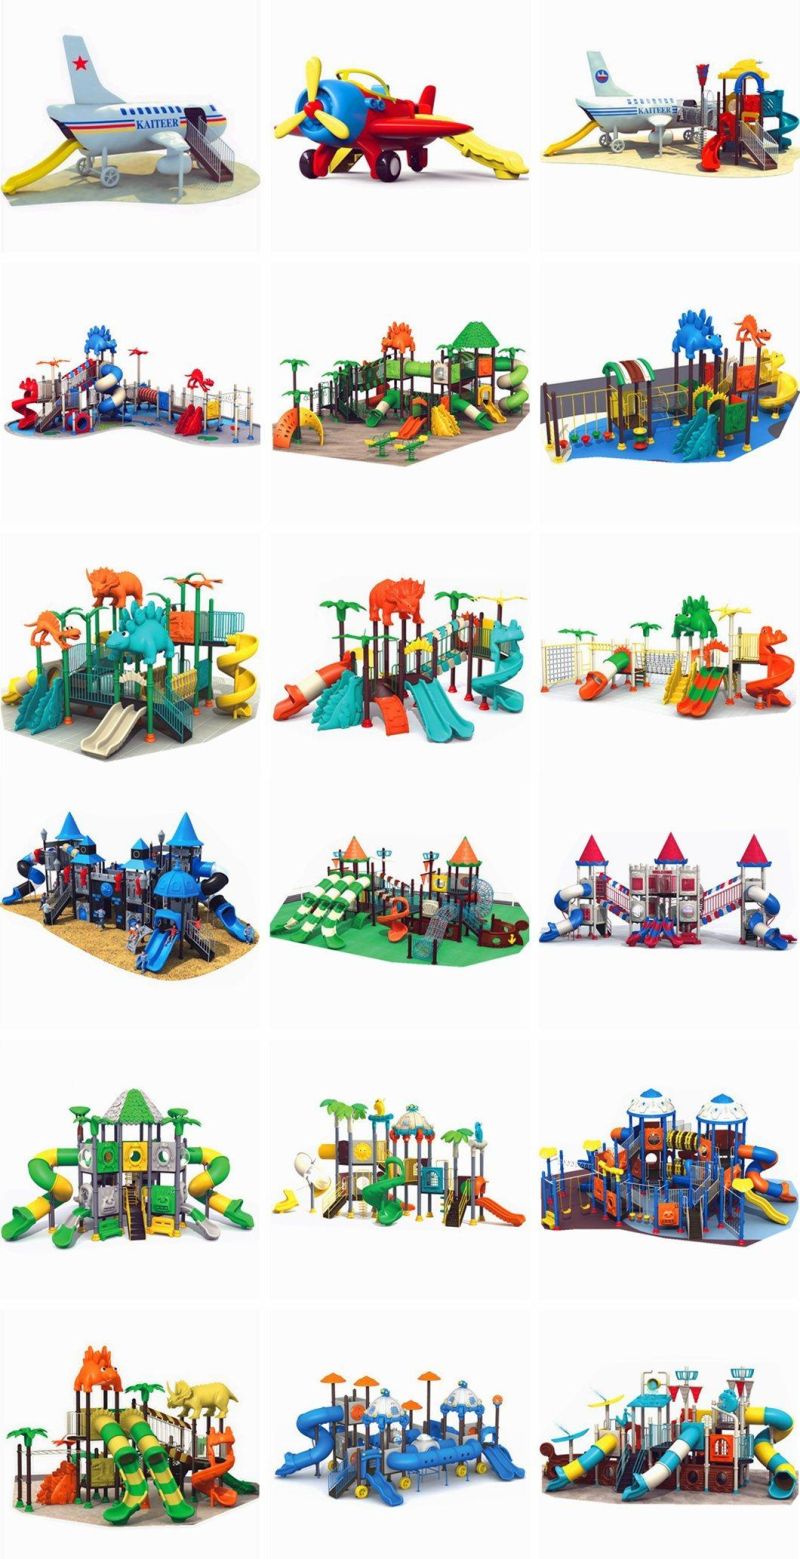 Community Outdoor Playground Plastic Slide Kids Amusement Park Equipment 275b